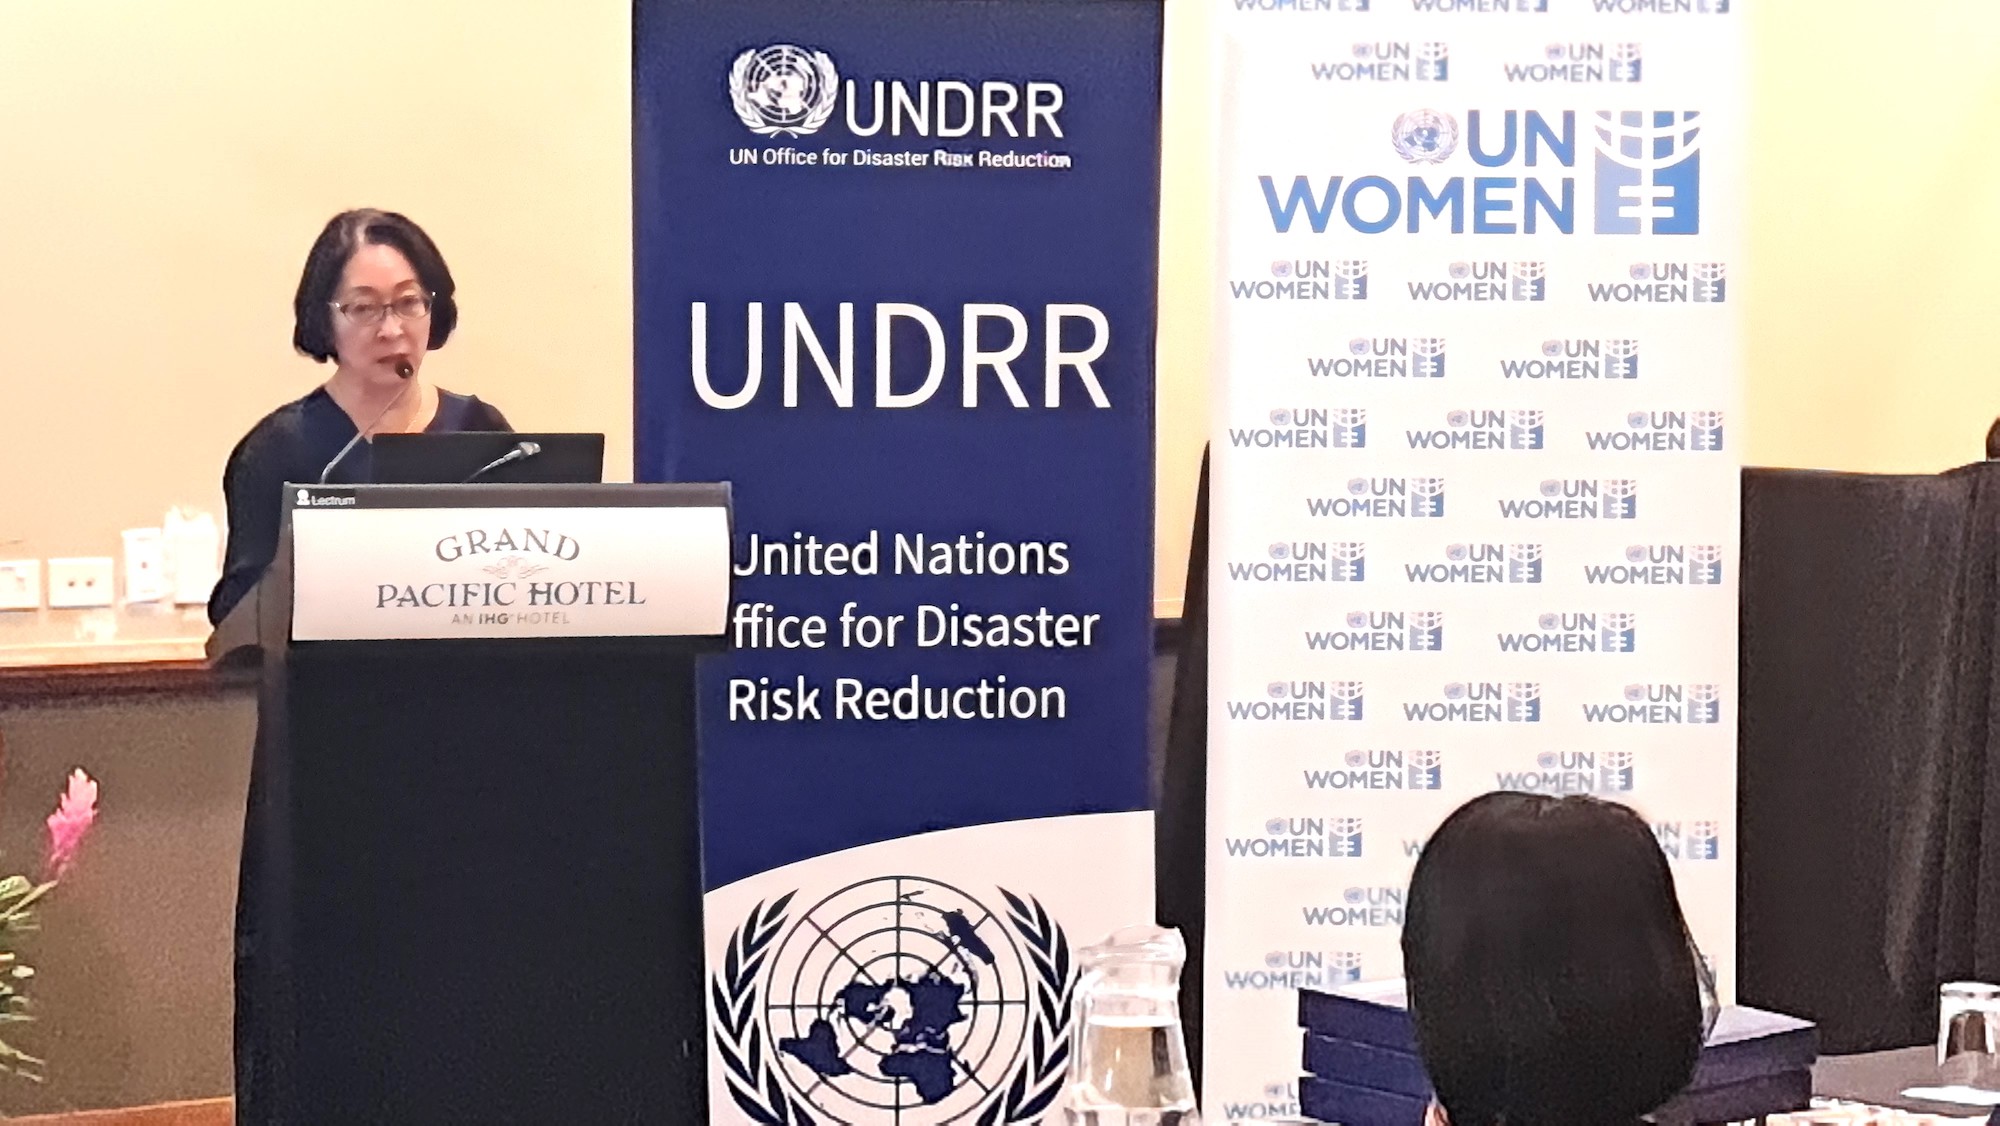 Mami Mizutori speaking next to two banners: UNDRR's and UN Women's